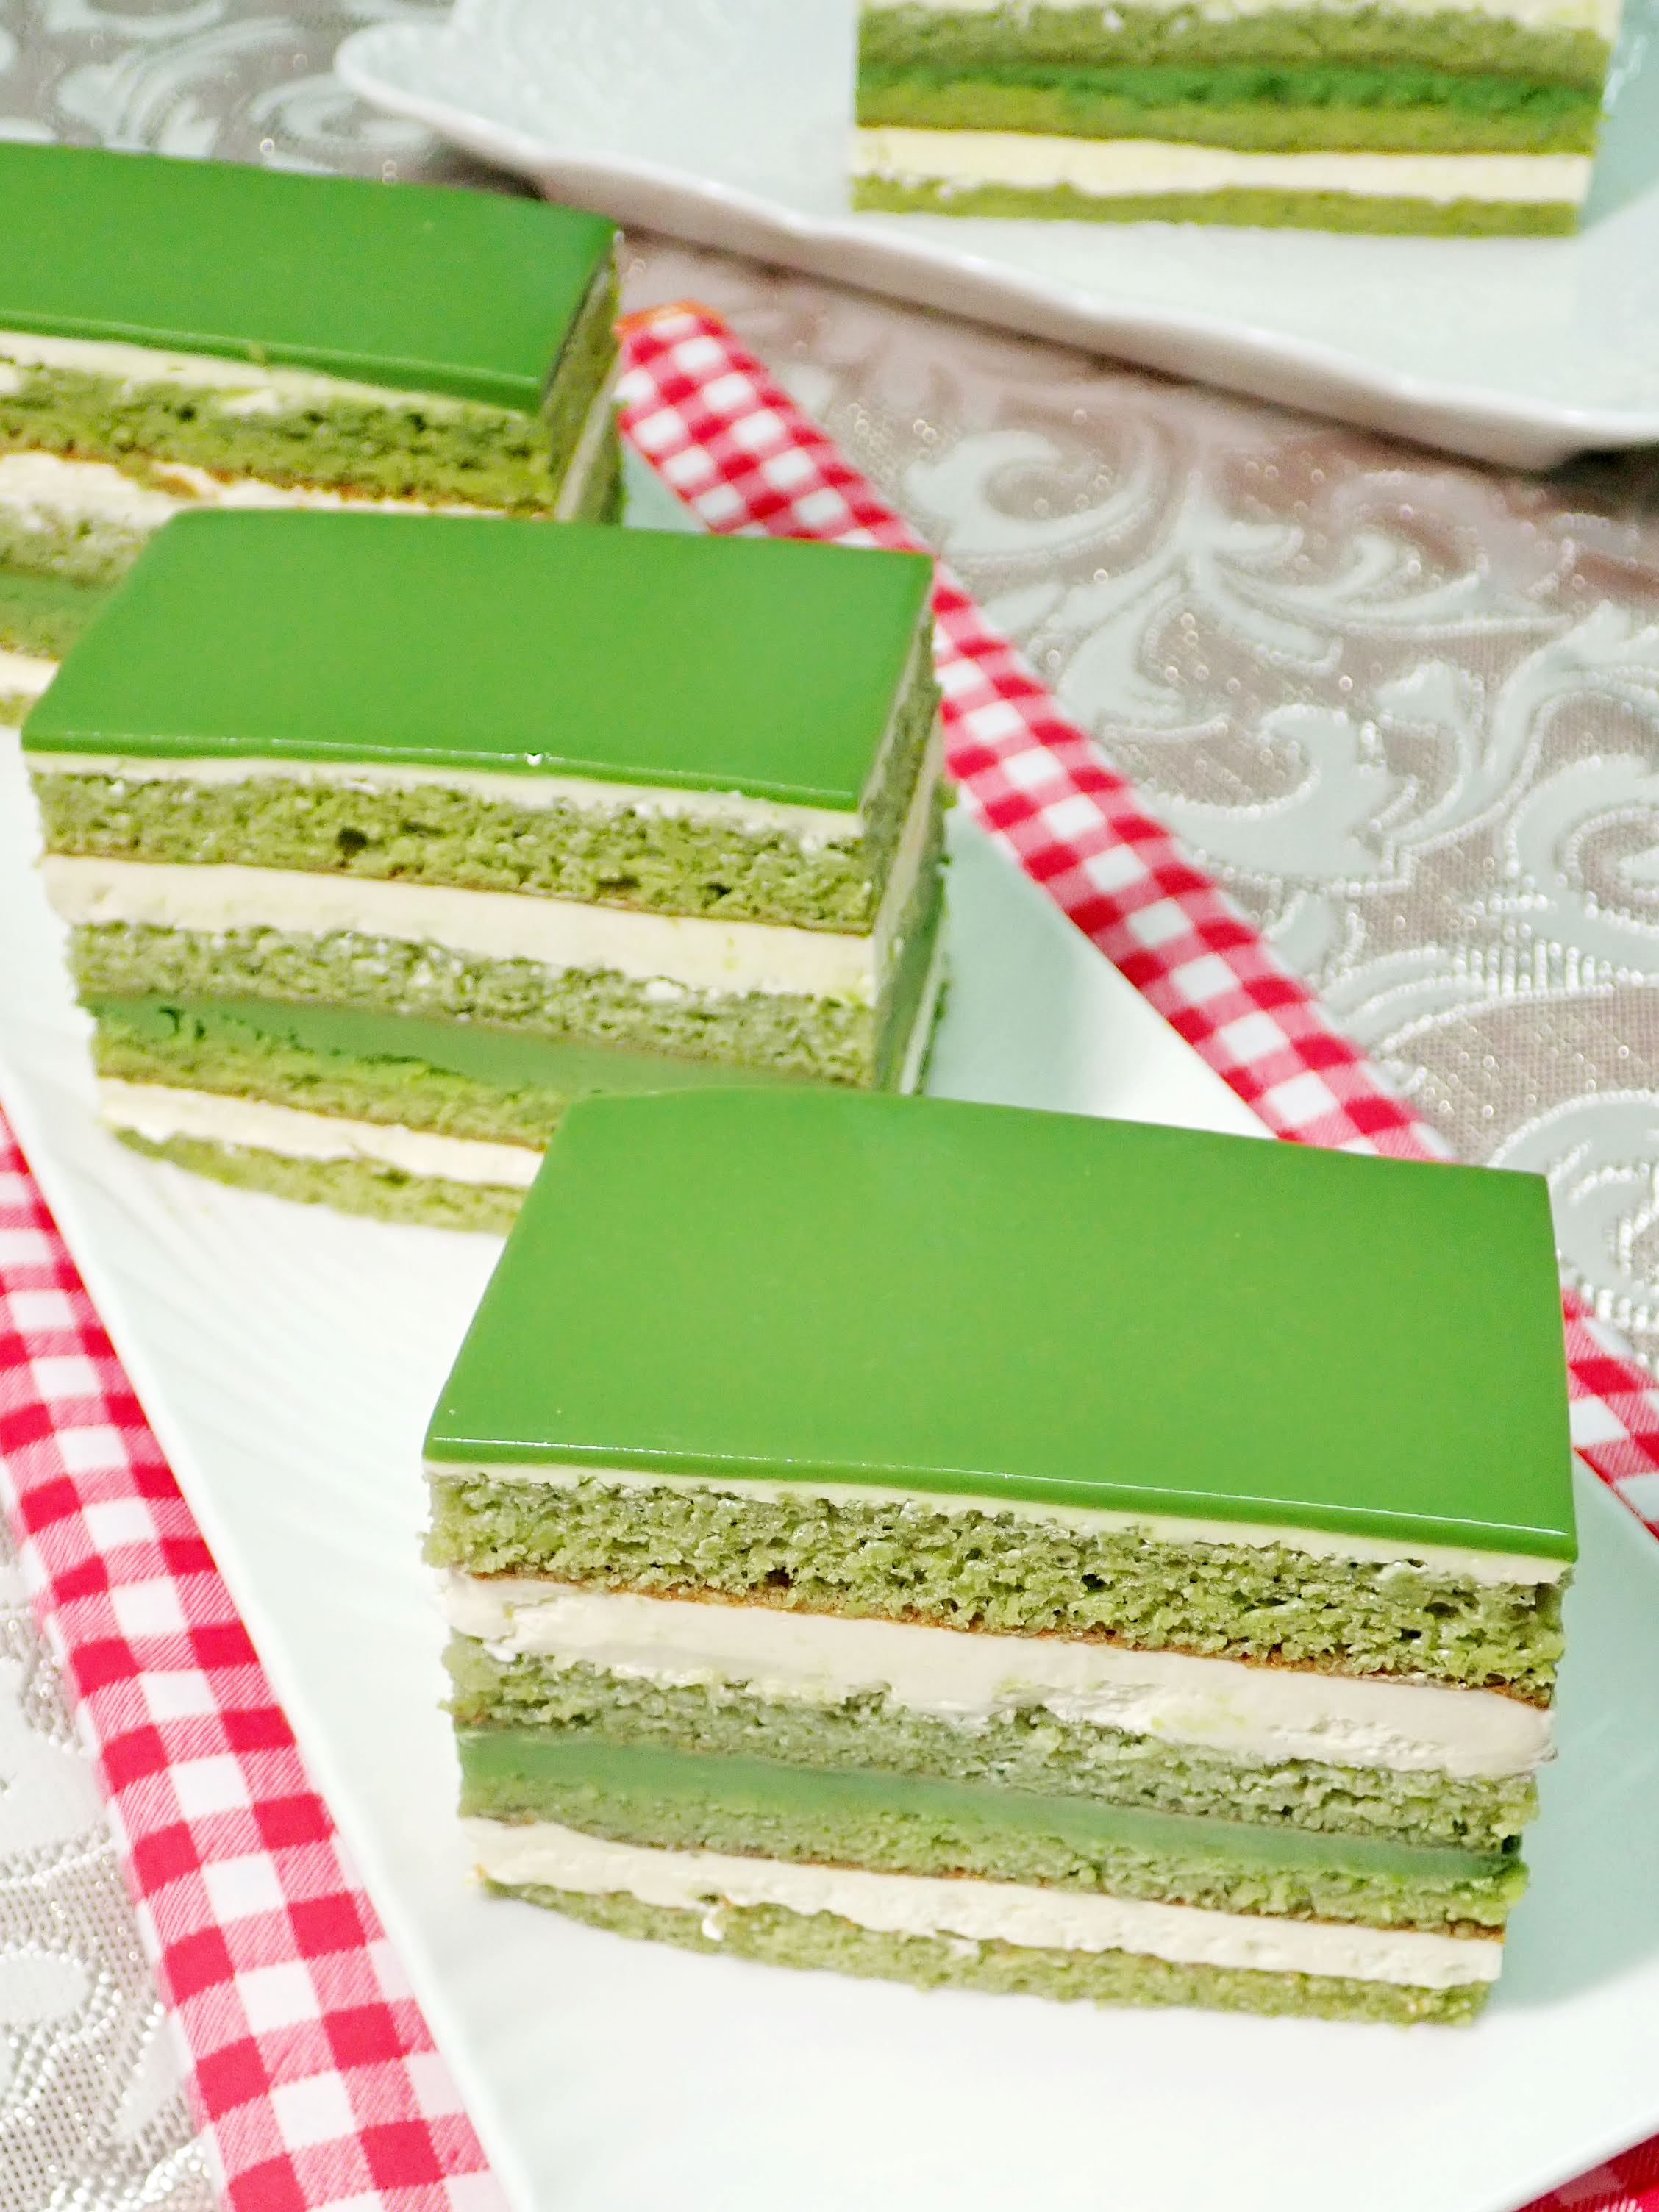 教你做经典的欧培拉Opera Cake，高端地道的法式甜点_哔哩哔哩 (゜-゜)つロ 干杯~-bilibili